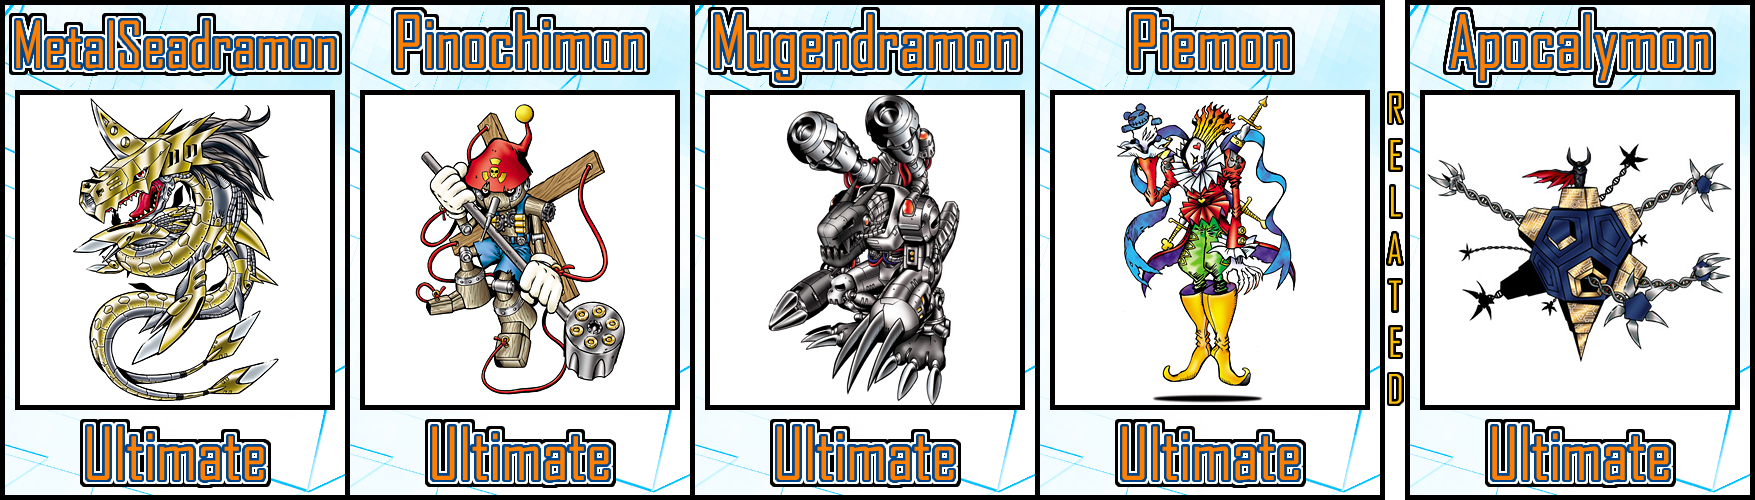 Category:Dark Area, Digimon Masters Online Wiki